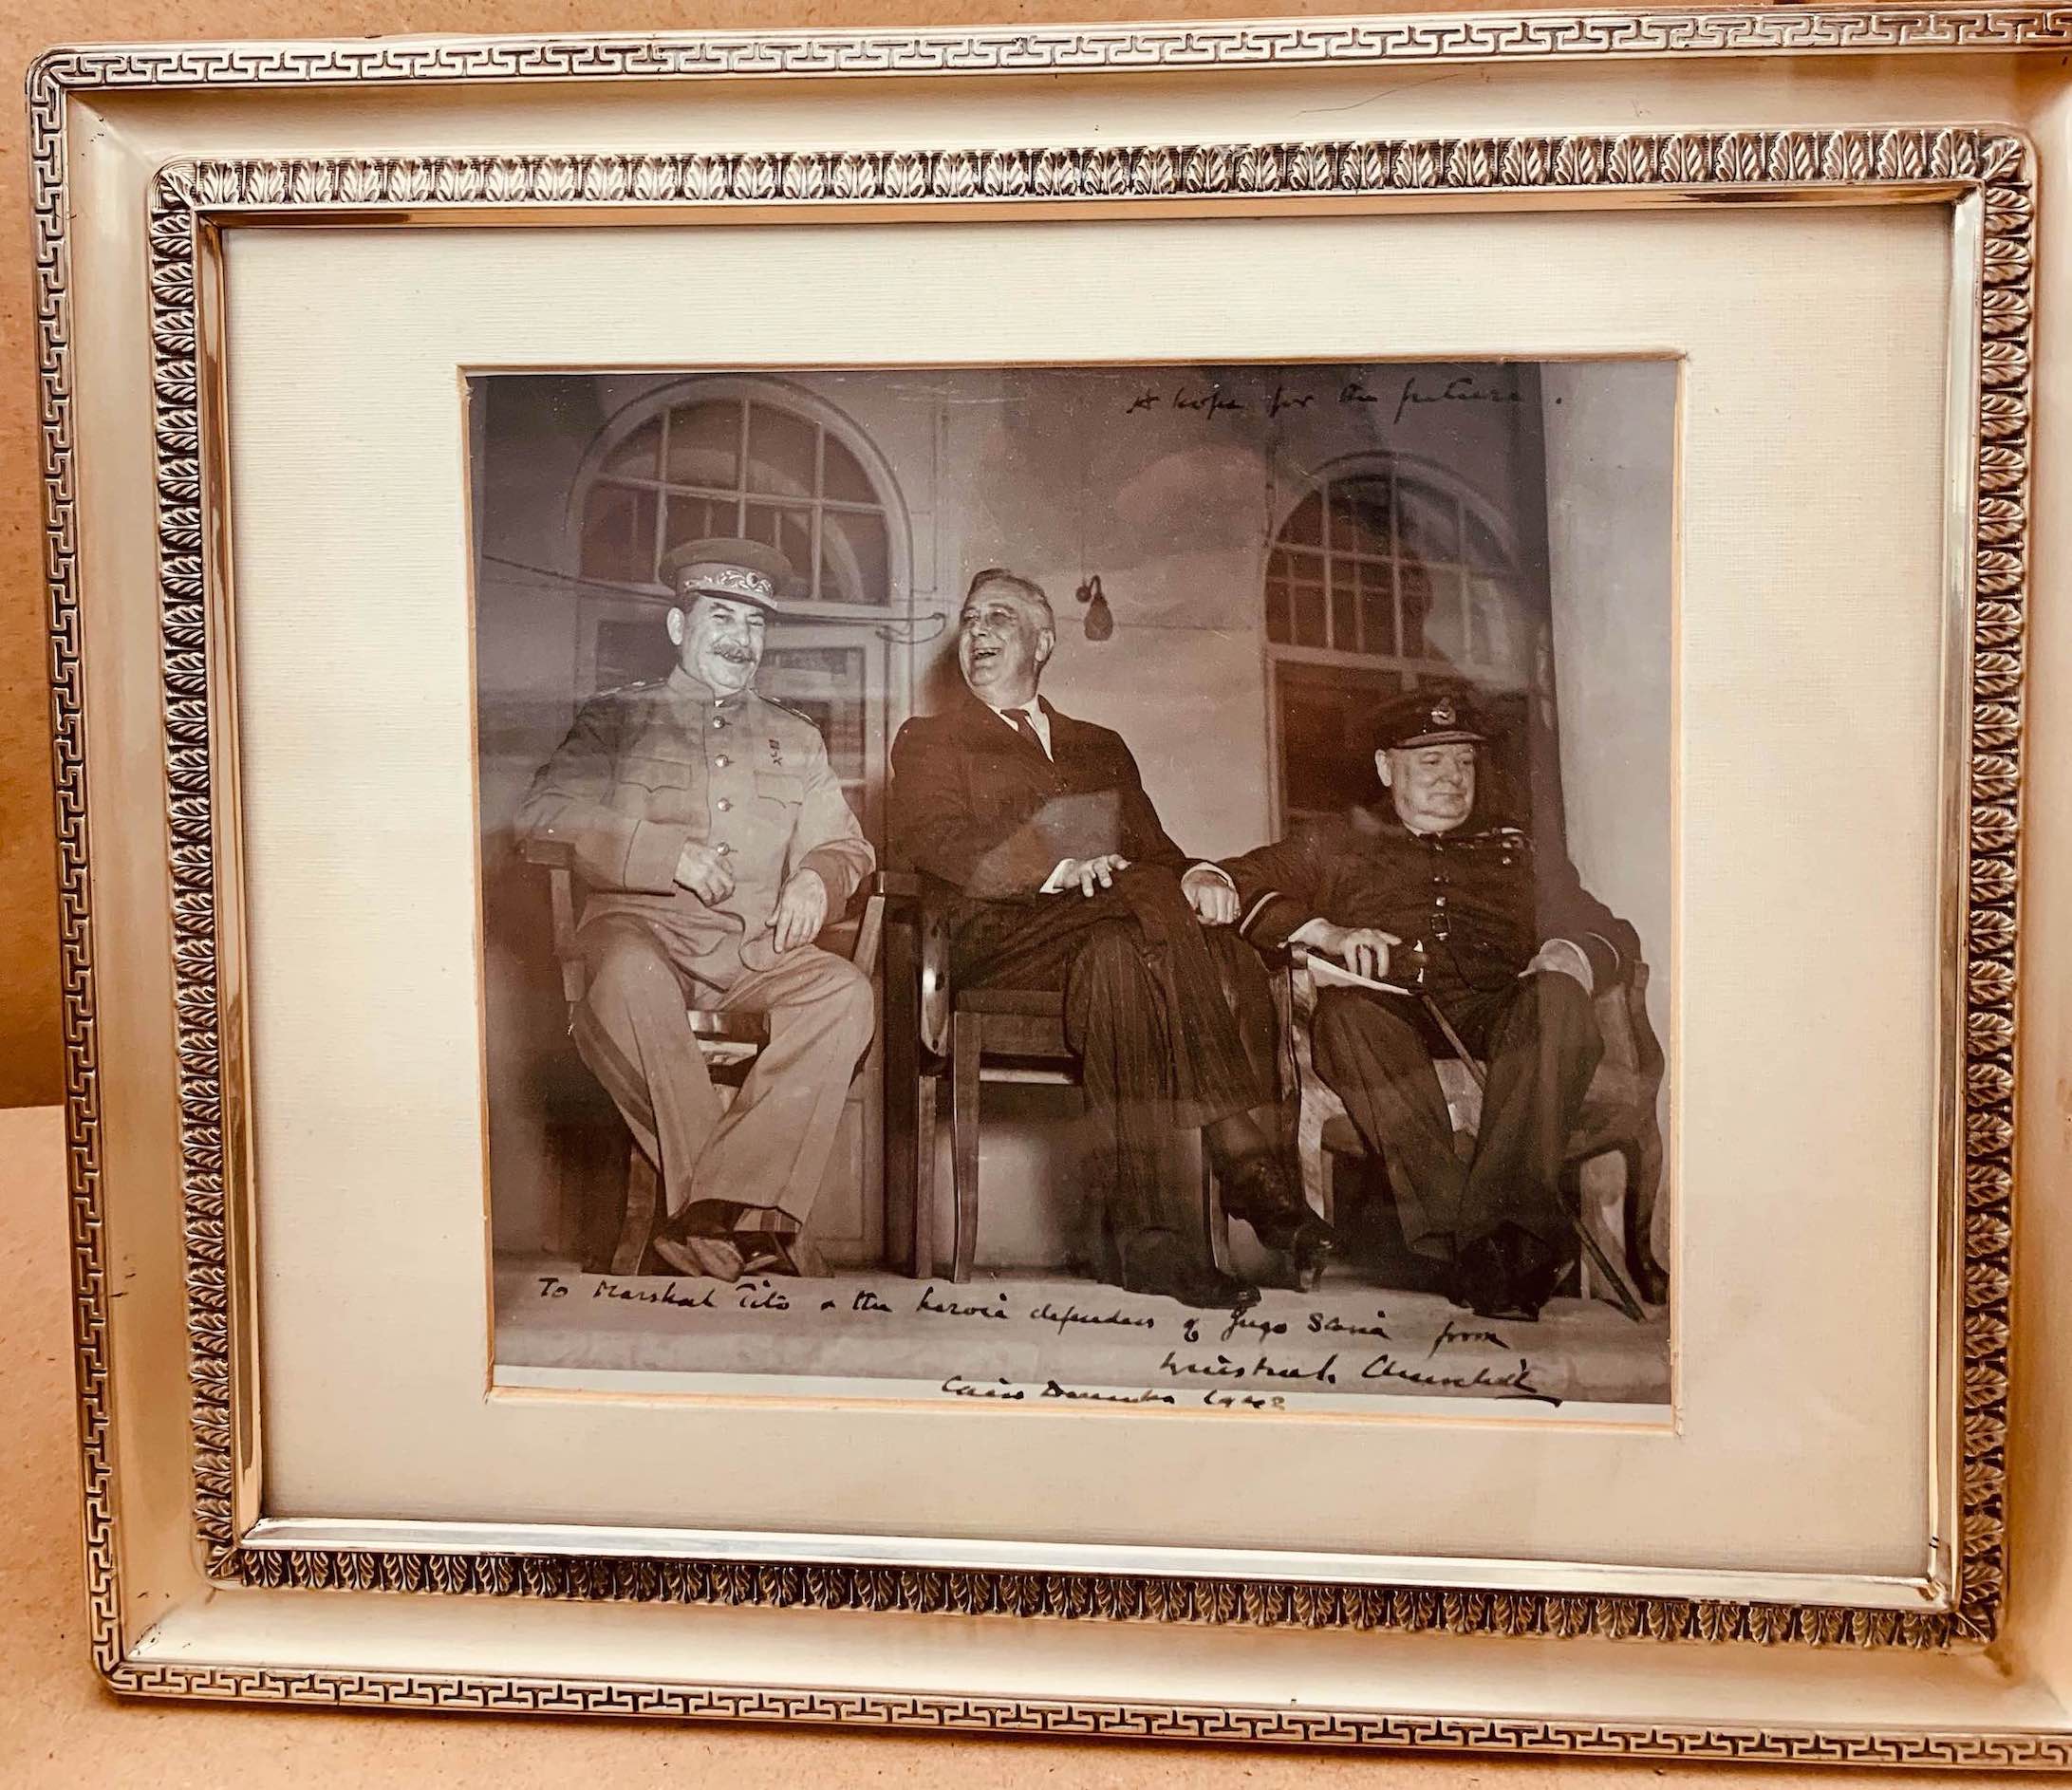 Signed photograph of Joseph Stalin Winston Churchill and Franklin Roosevelt 1943